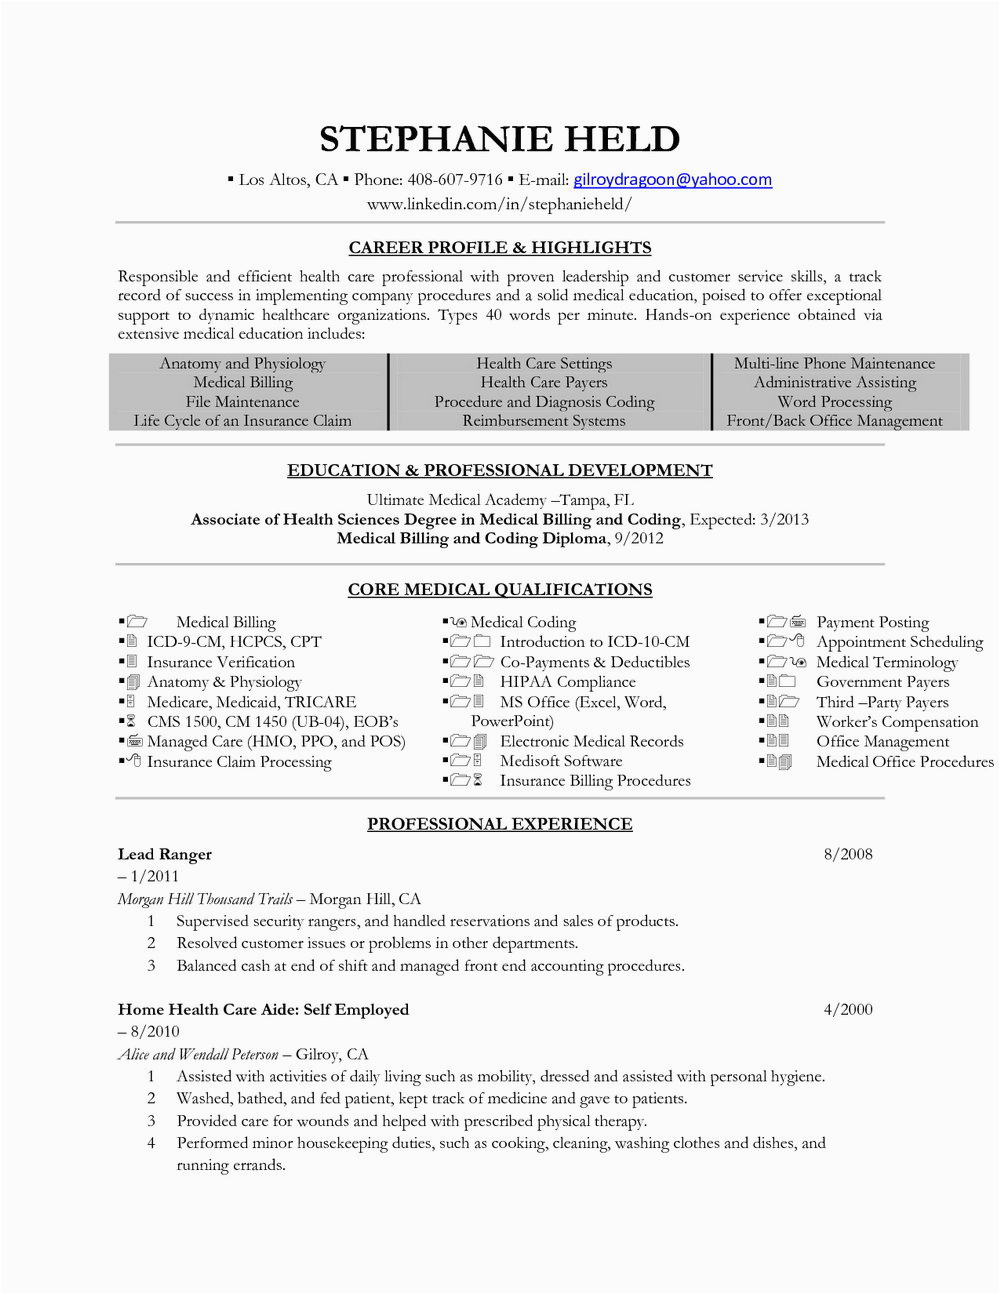 Entry Level Medical Billing and Coding Resume Samples Resume for Medical Billing and Coding Specialist